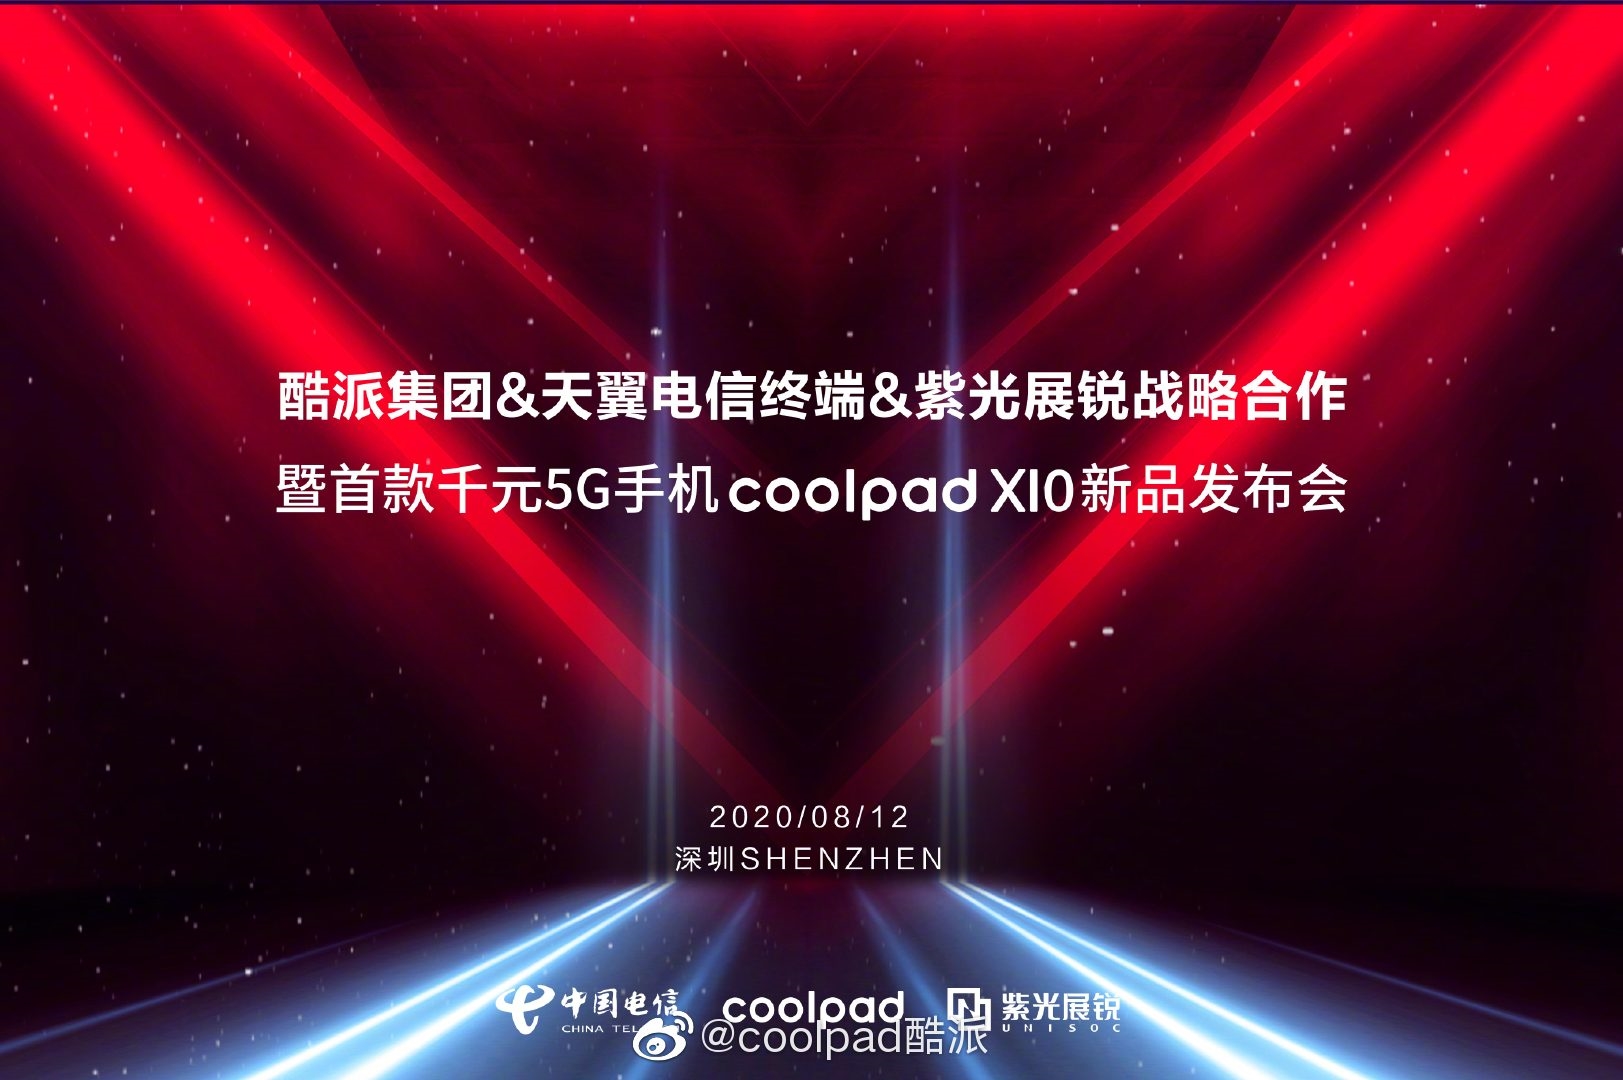 Coolpad X10 Teaser